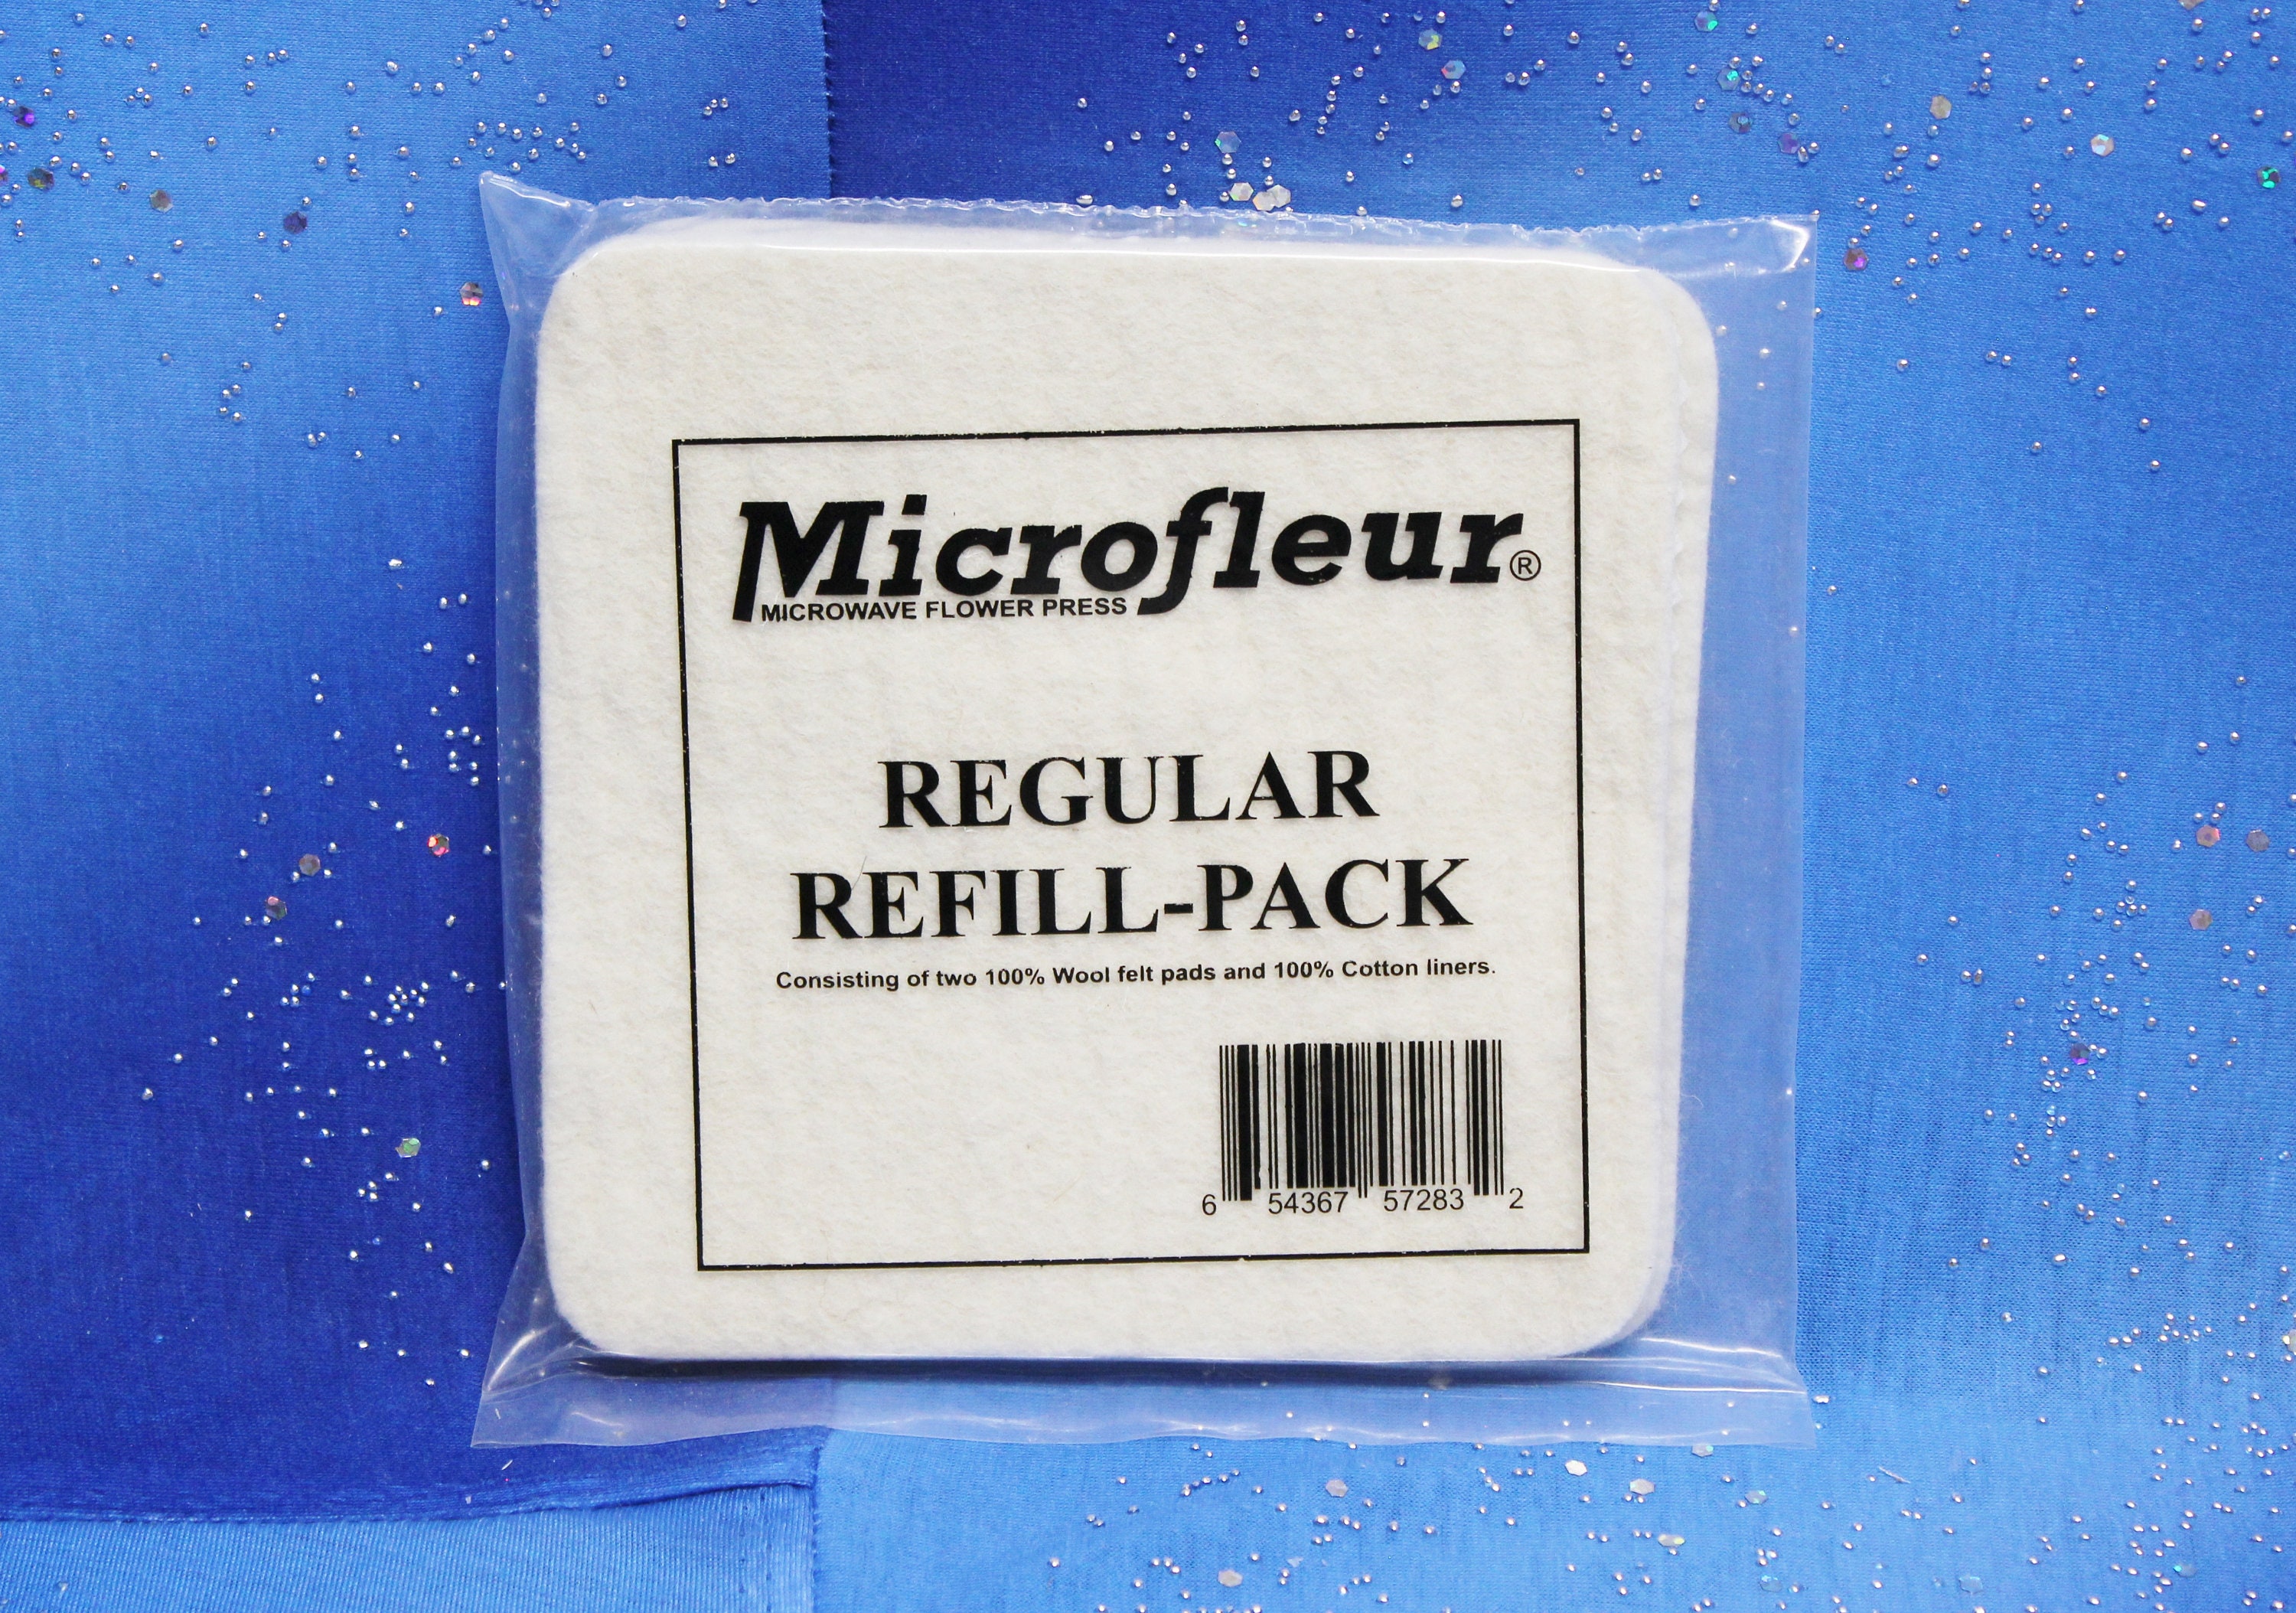 Microfleur Microwave Flower Press